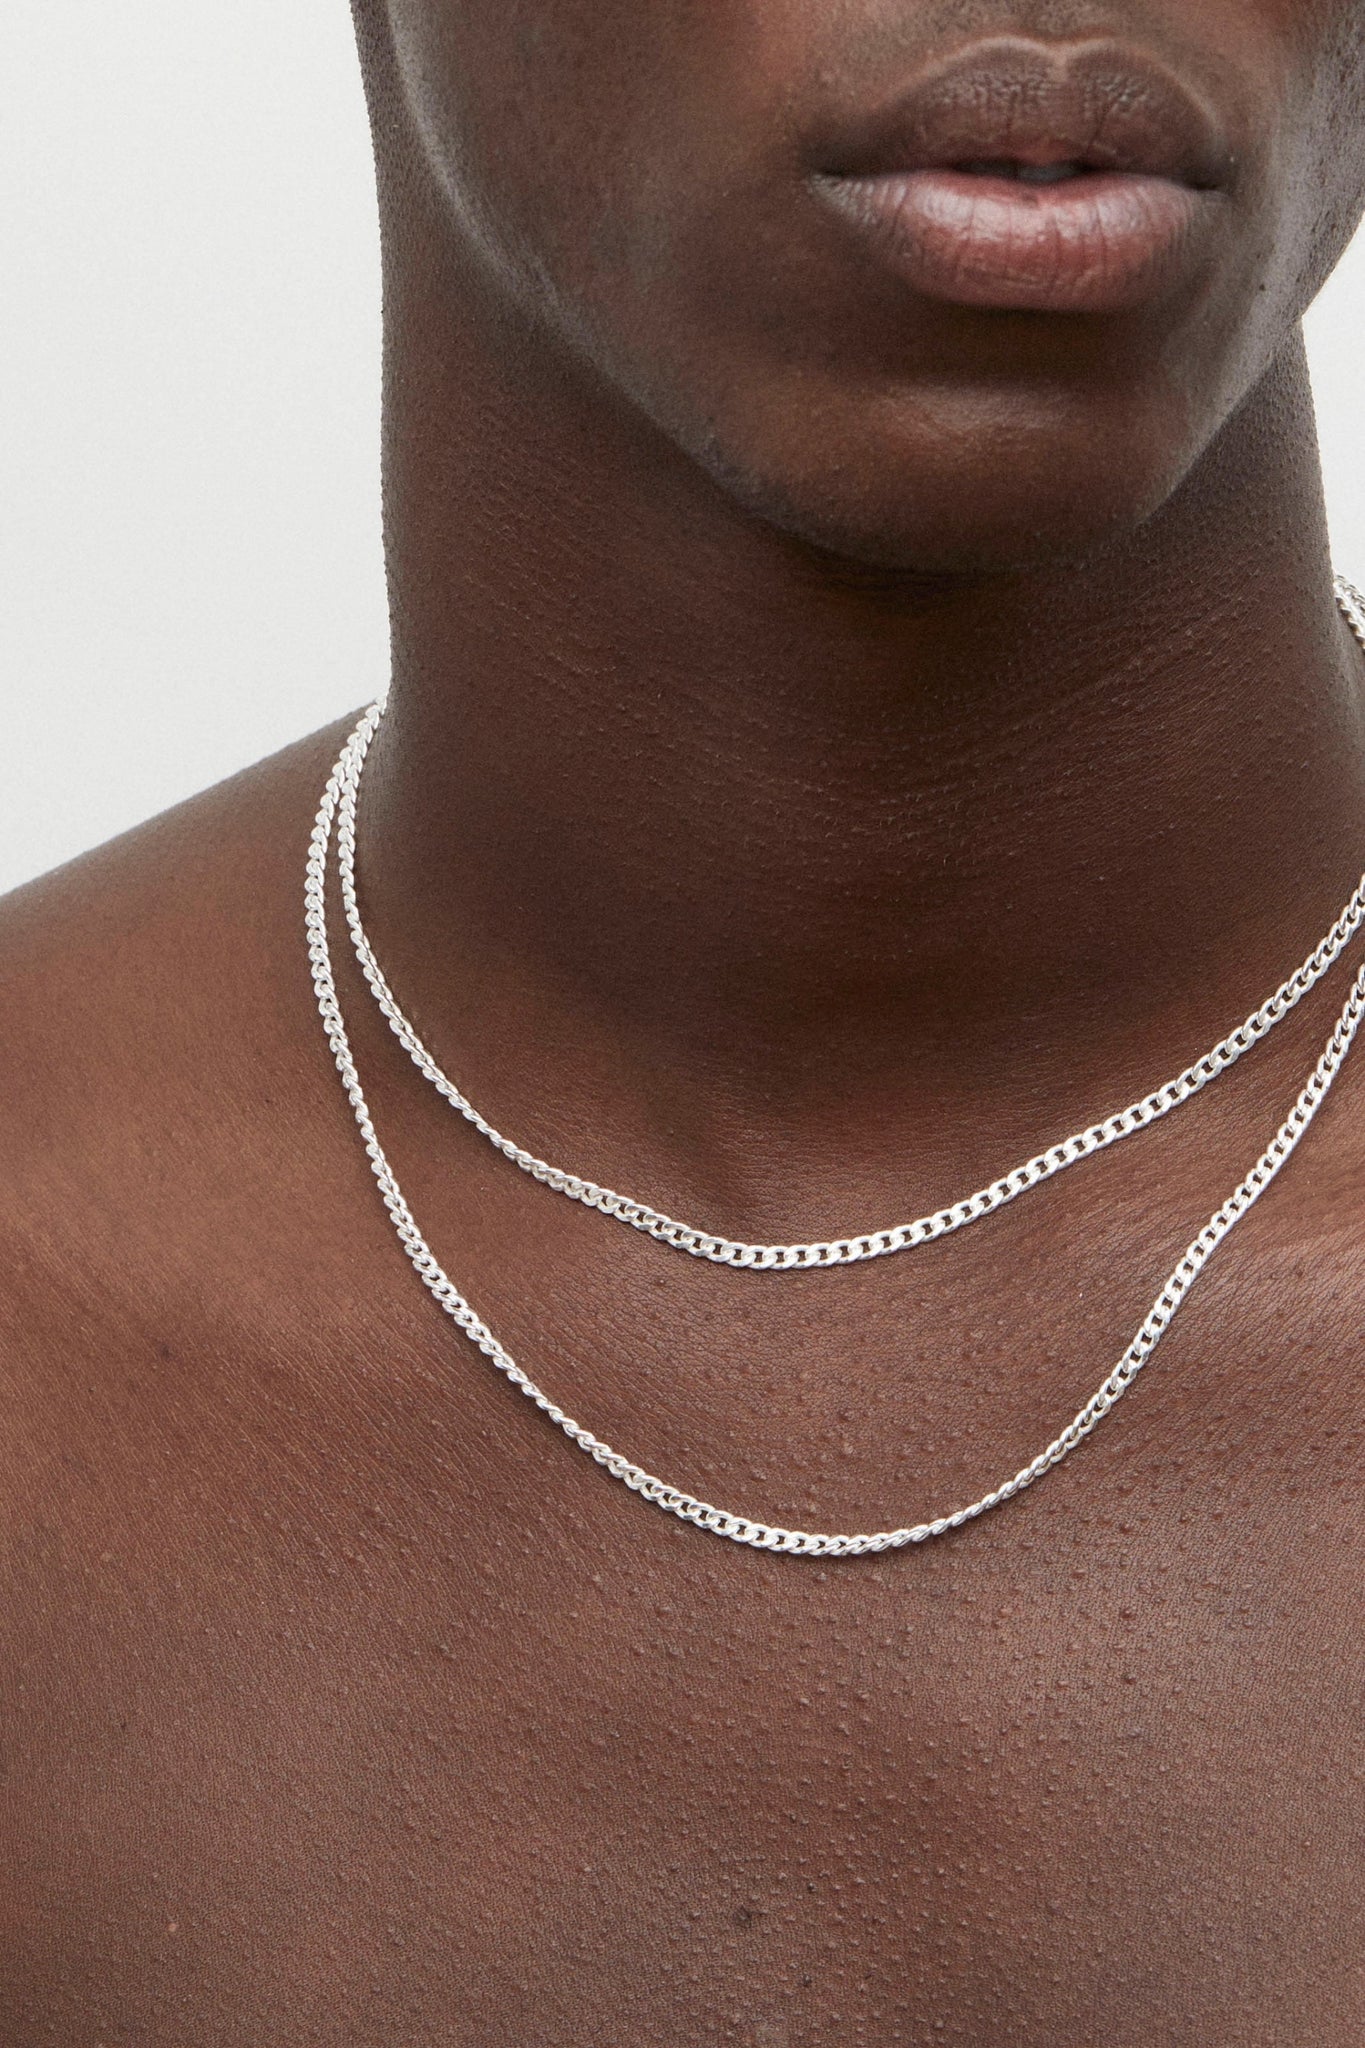 Molded Chained Necklace Mini - Necklaces - Cornelia Webb - 5